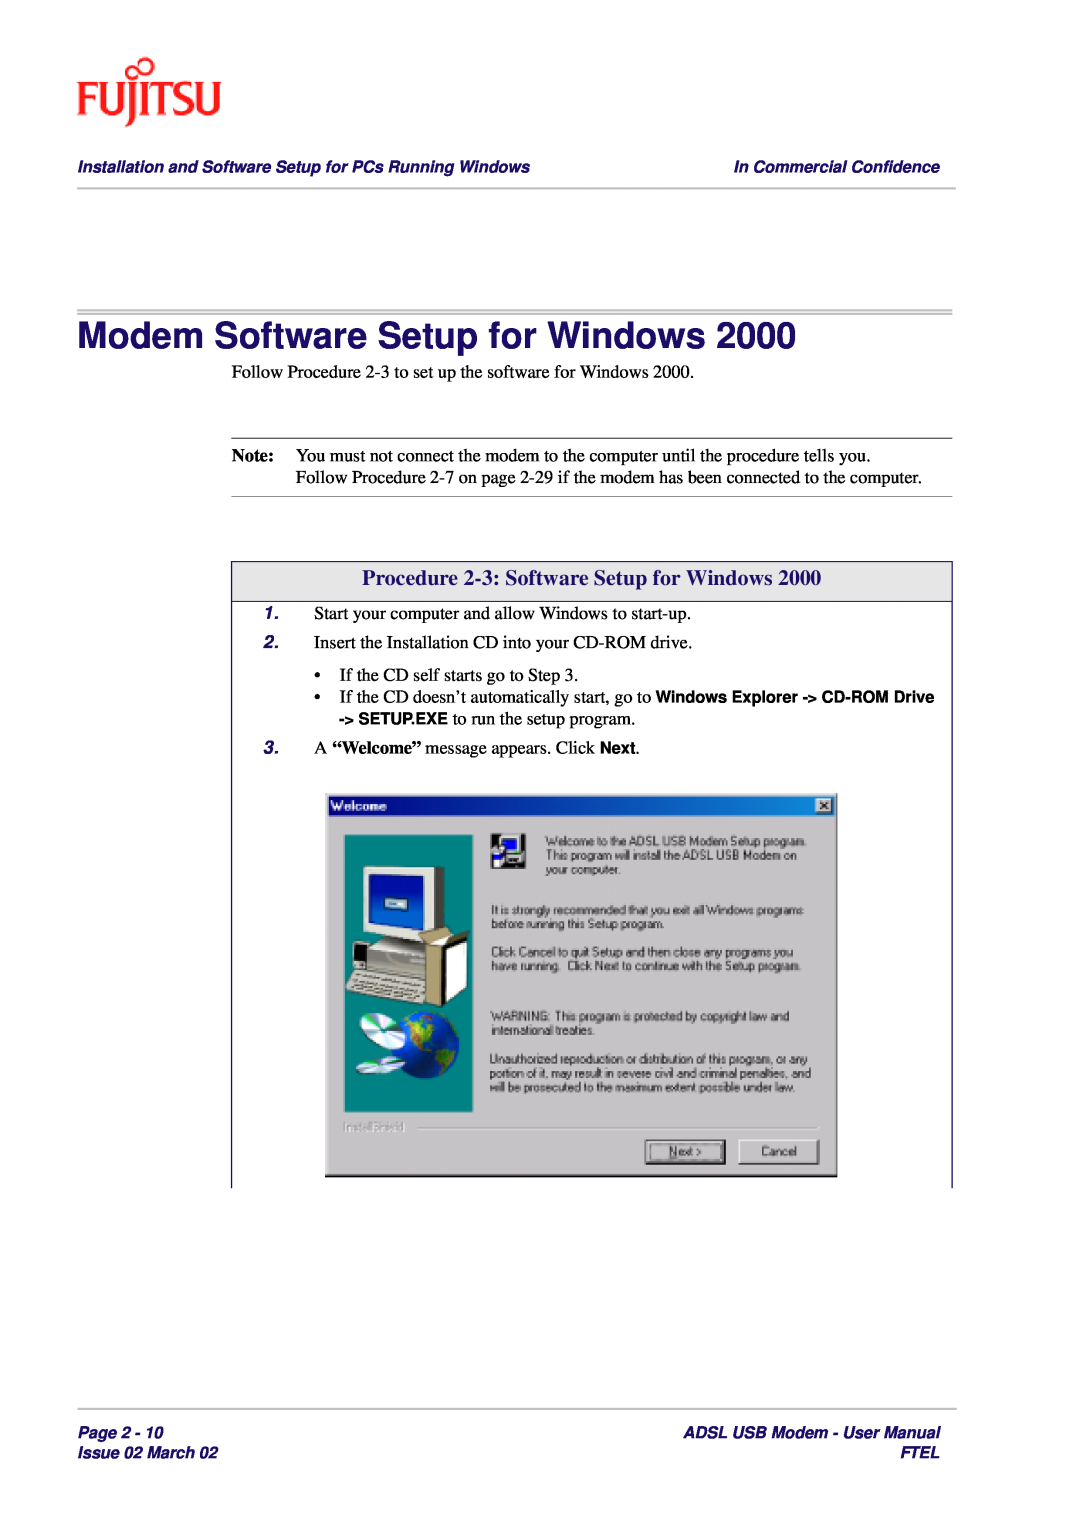 Fujitsu 3XAX-00803AAS user manual Procedure 2-3 Software Setup for Windows, Modem Software Setup for Windows 